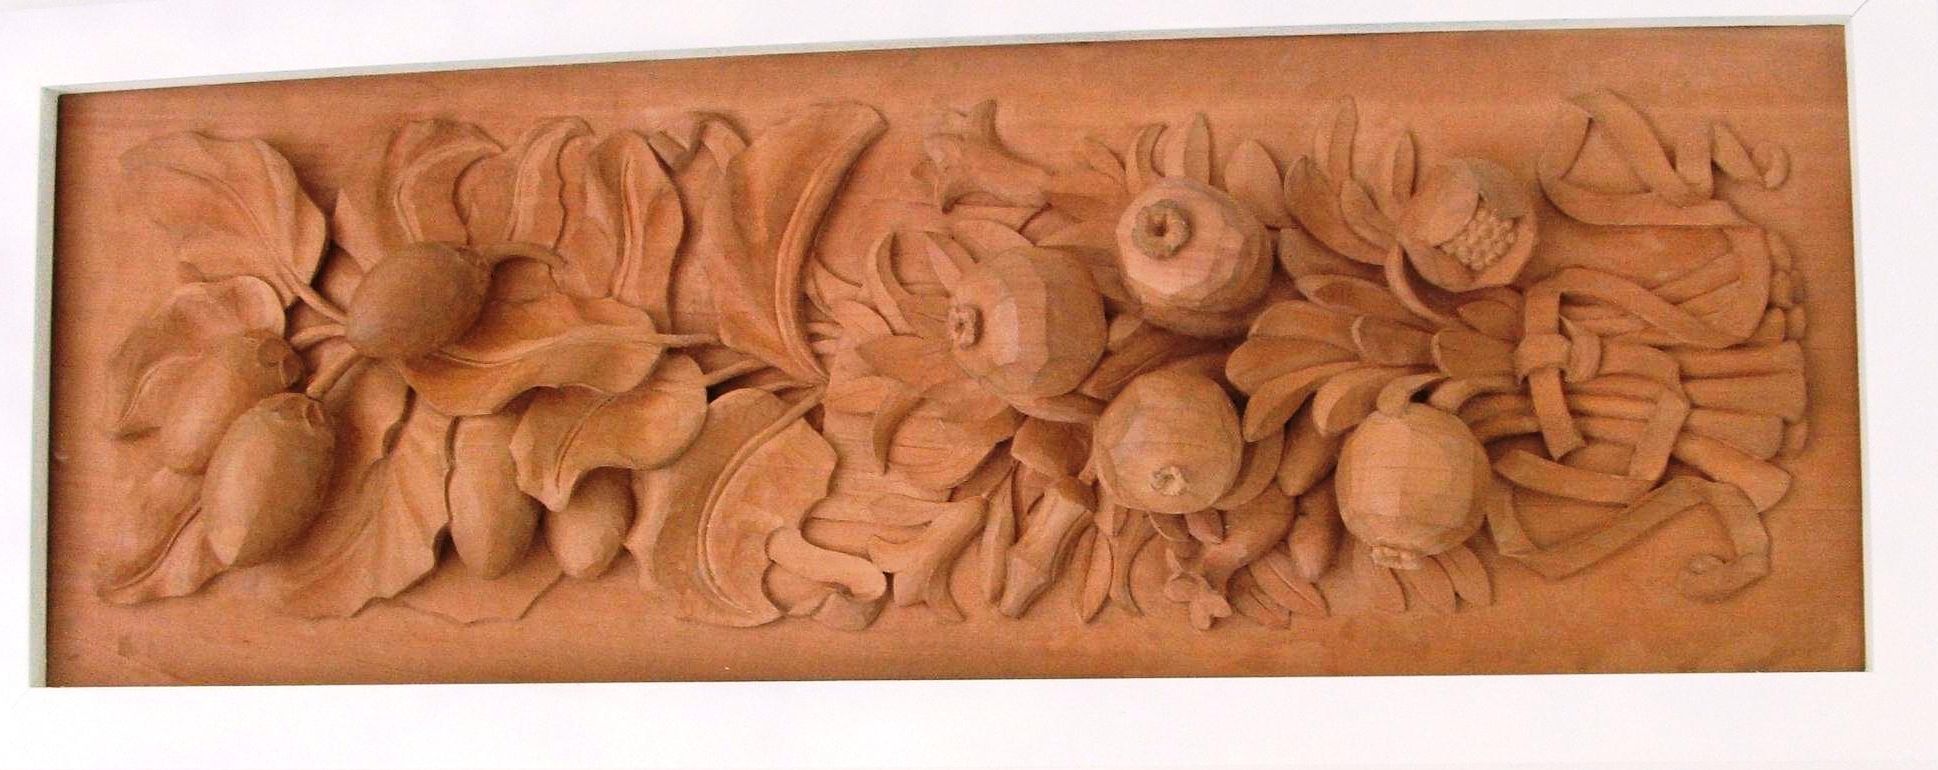 wood carving art download wood carving art encyclopedia art of wood ...